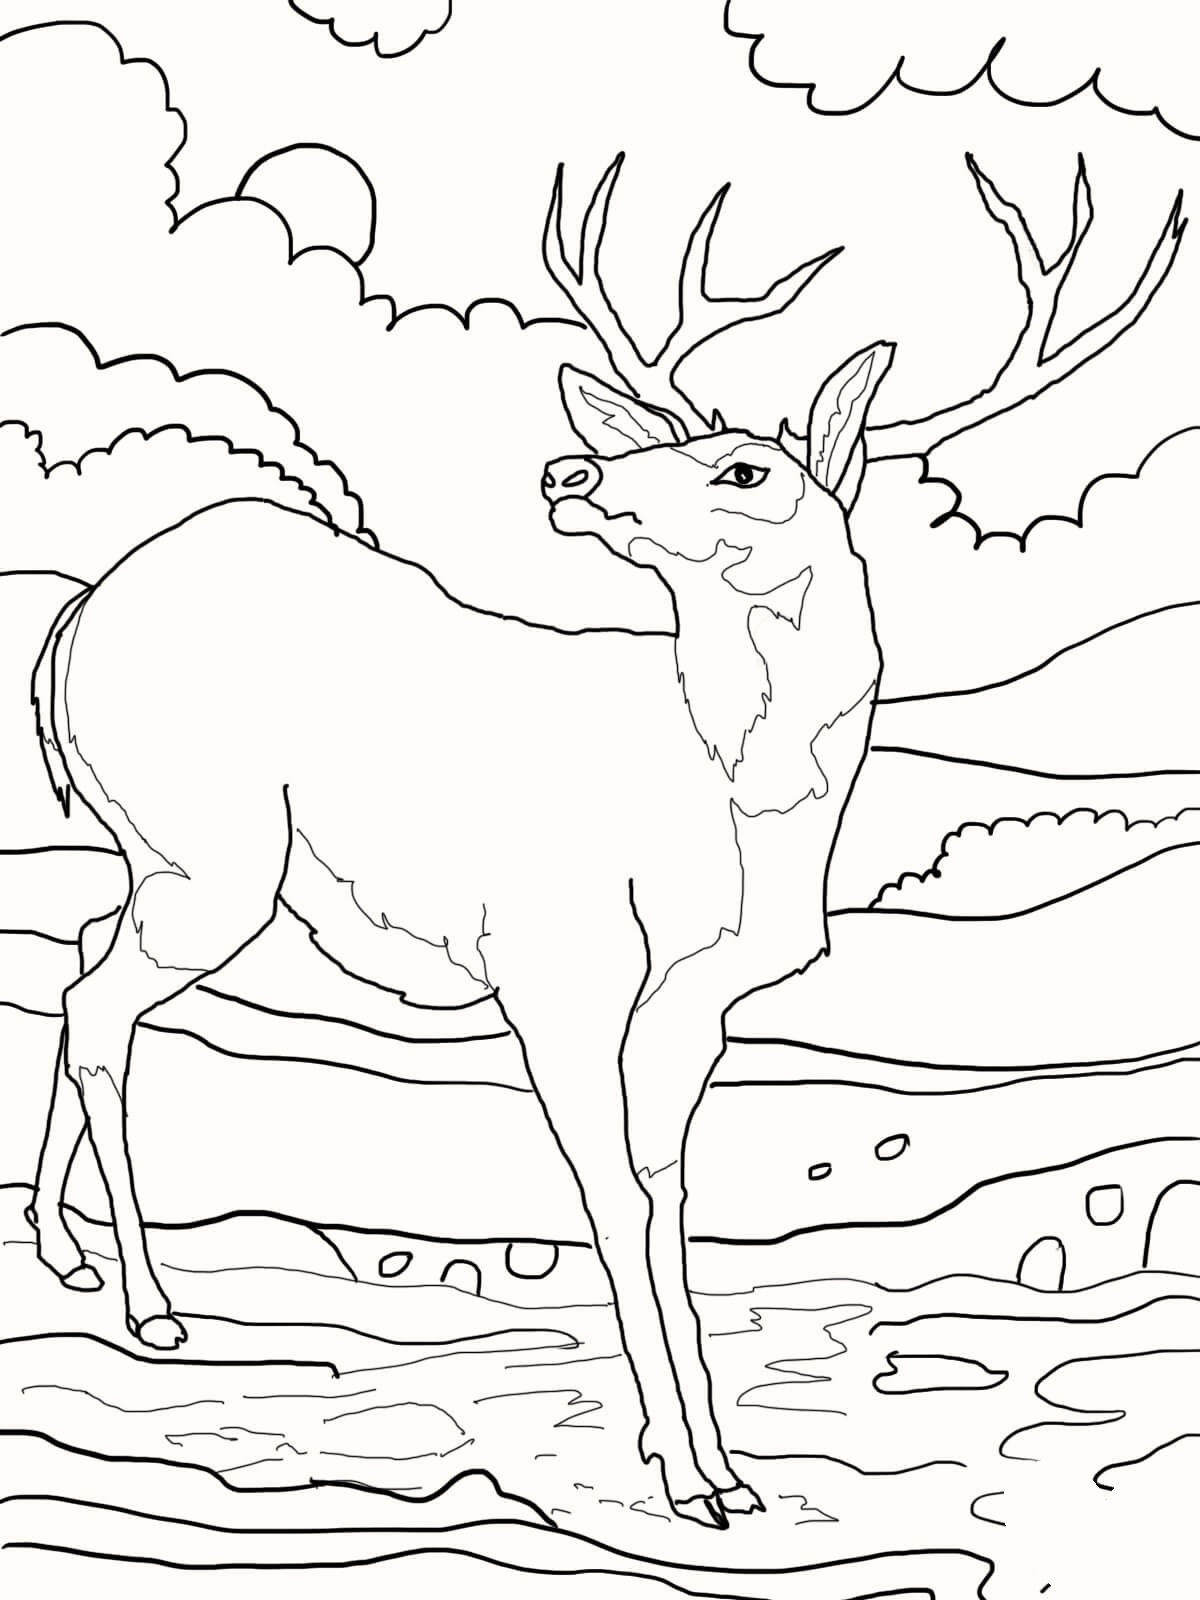 deer-coloring-pages-04